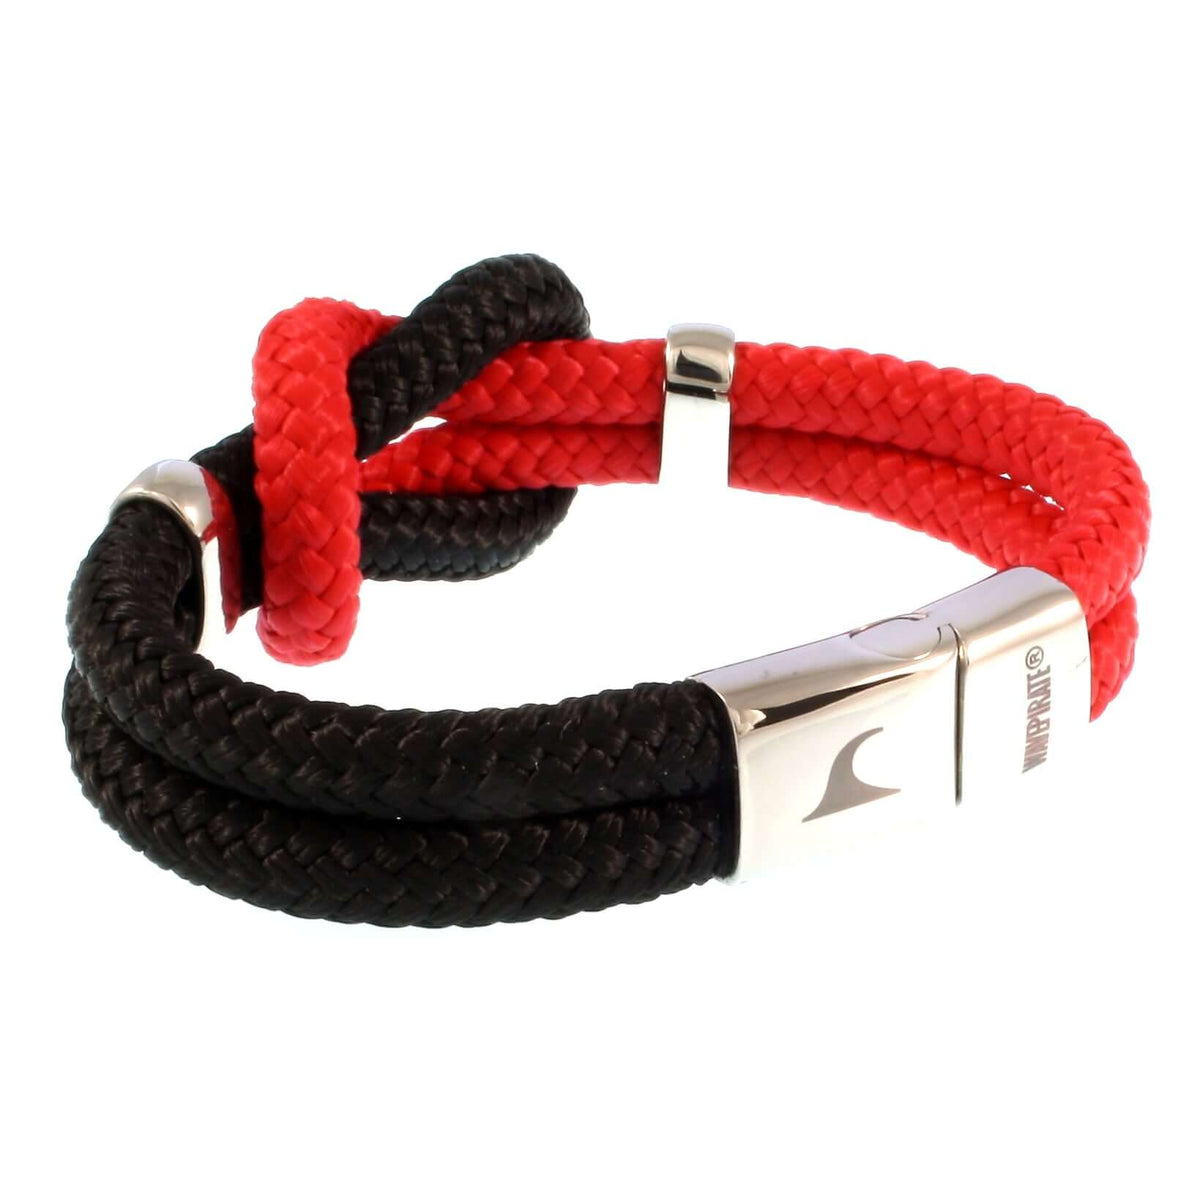 Damen-Segeltau-armband-pure-schwarz-rot-silber-geflochten-Edelstahlverschluss-hinten-wavepirate-shop-st